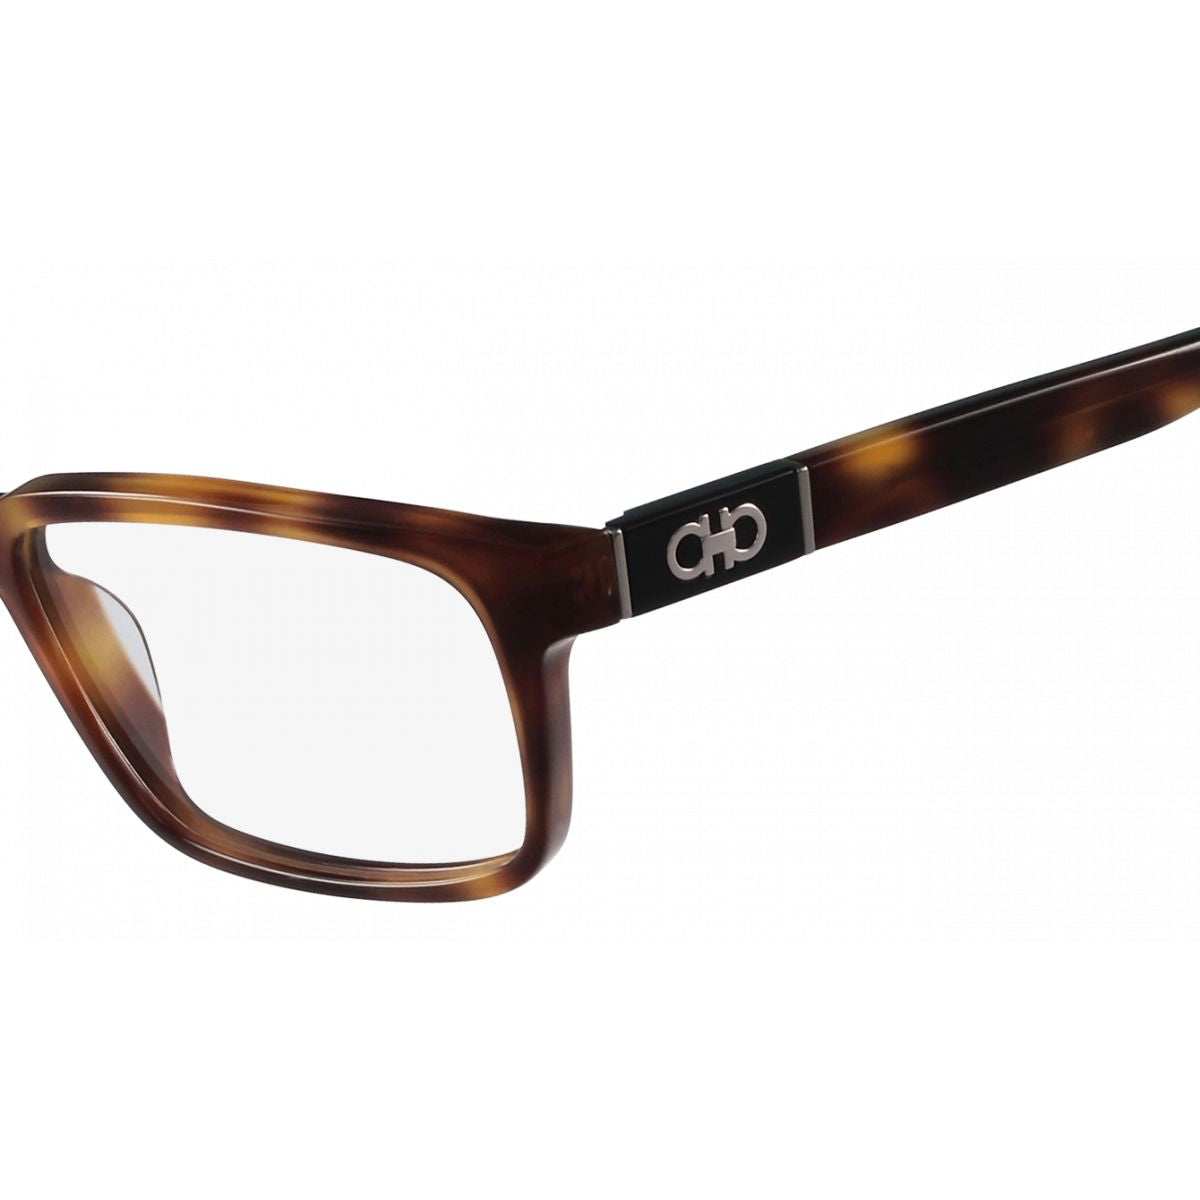 "best Salvatore Ferragamo SF2772 214 eyewear glasses frame for men's at optorium"